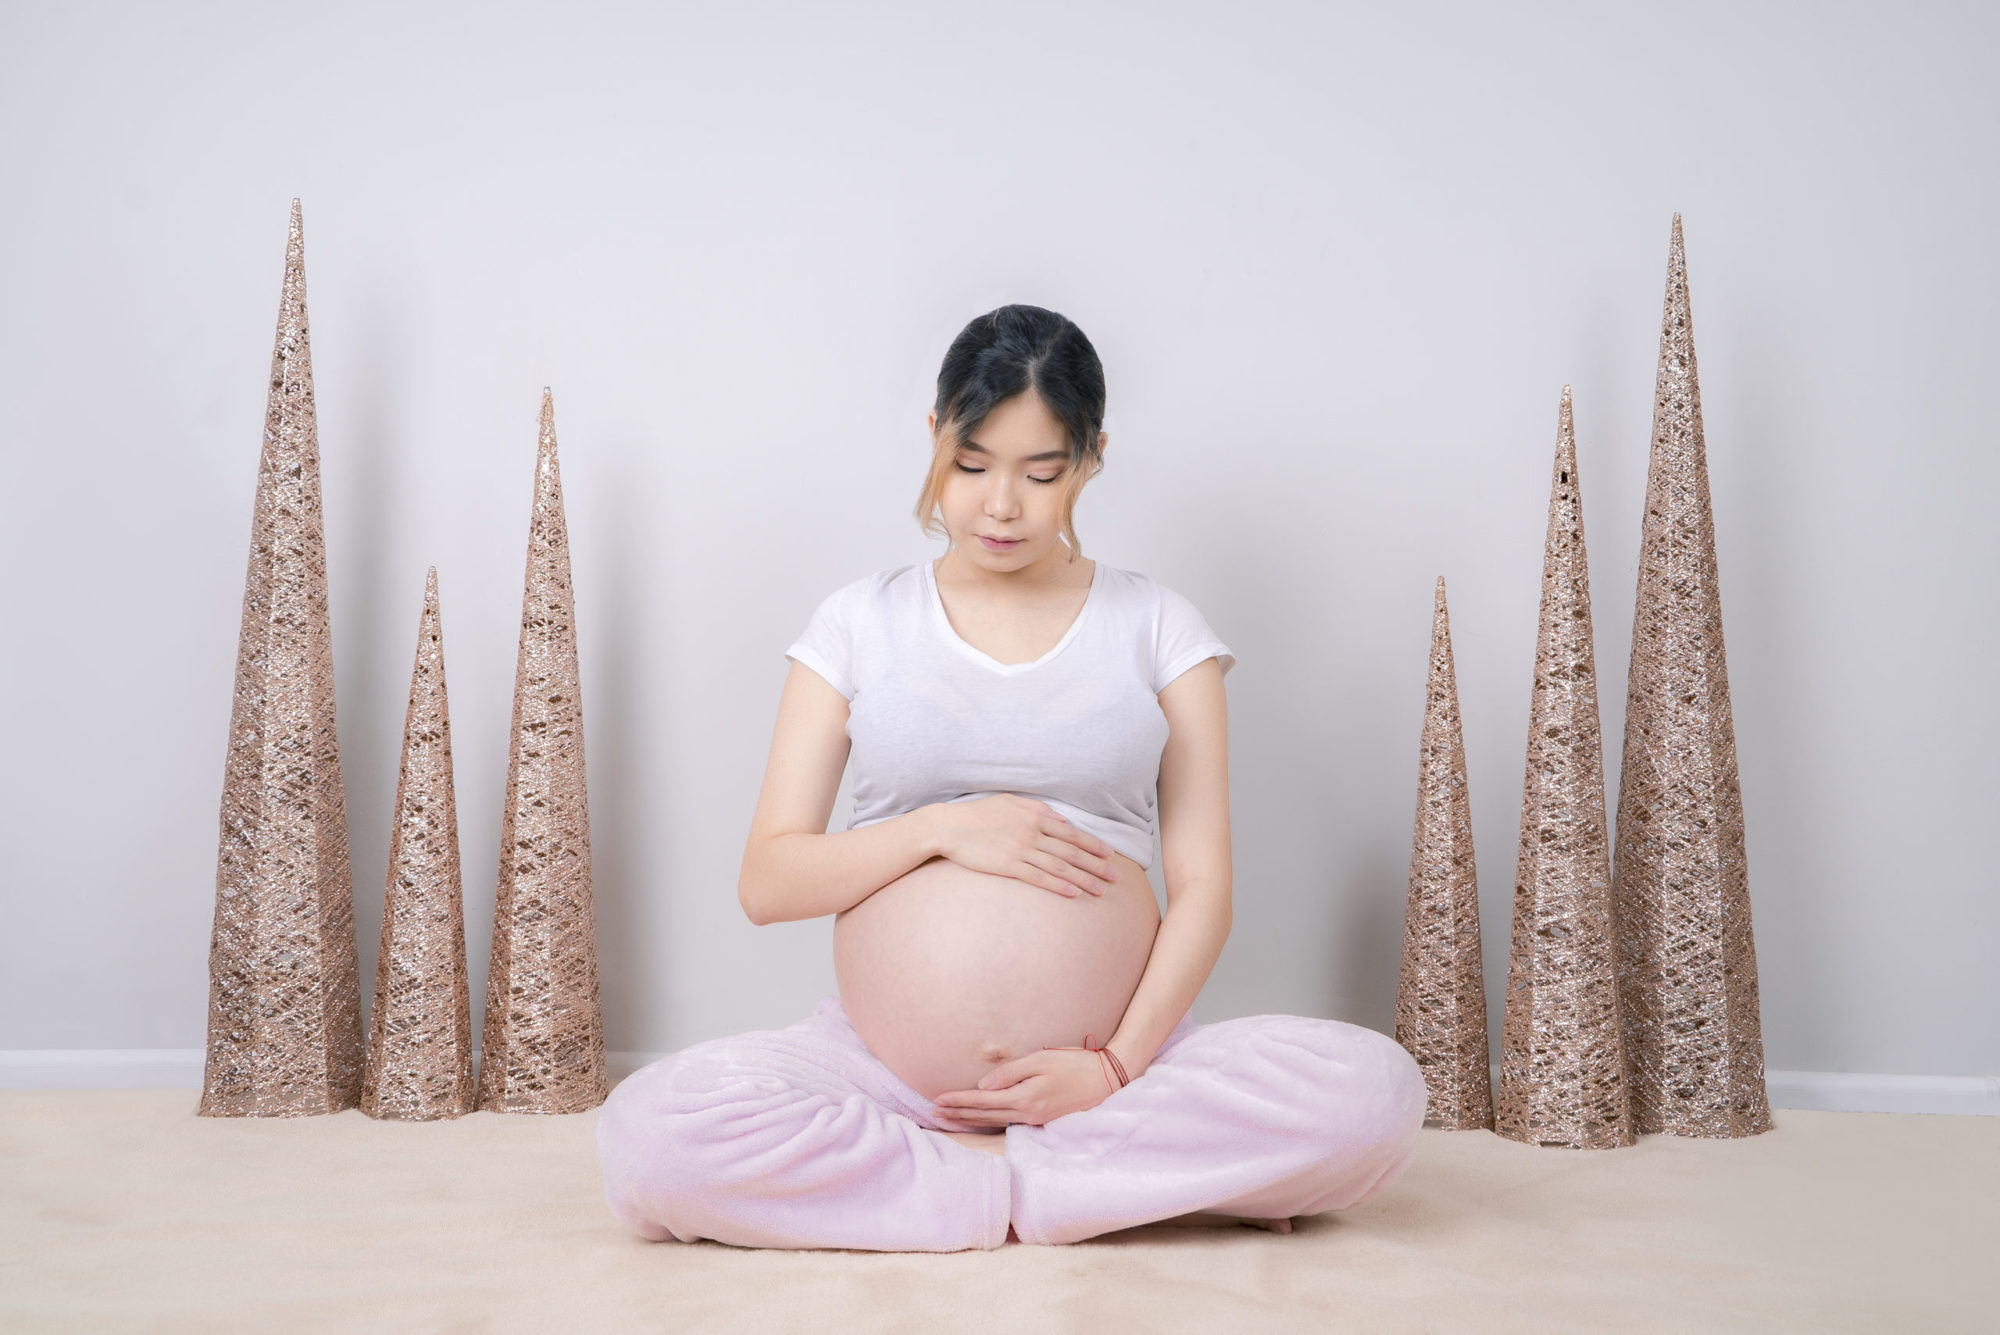 FOLATE in Fertility & Pregnancy